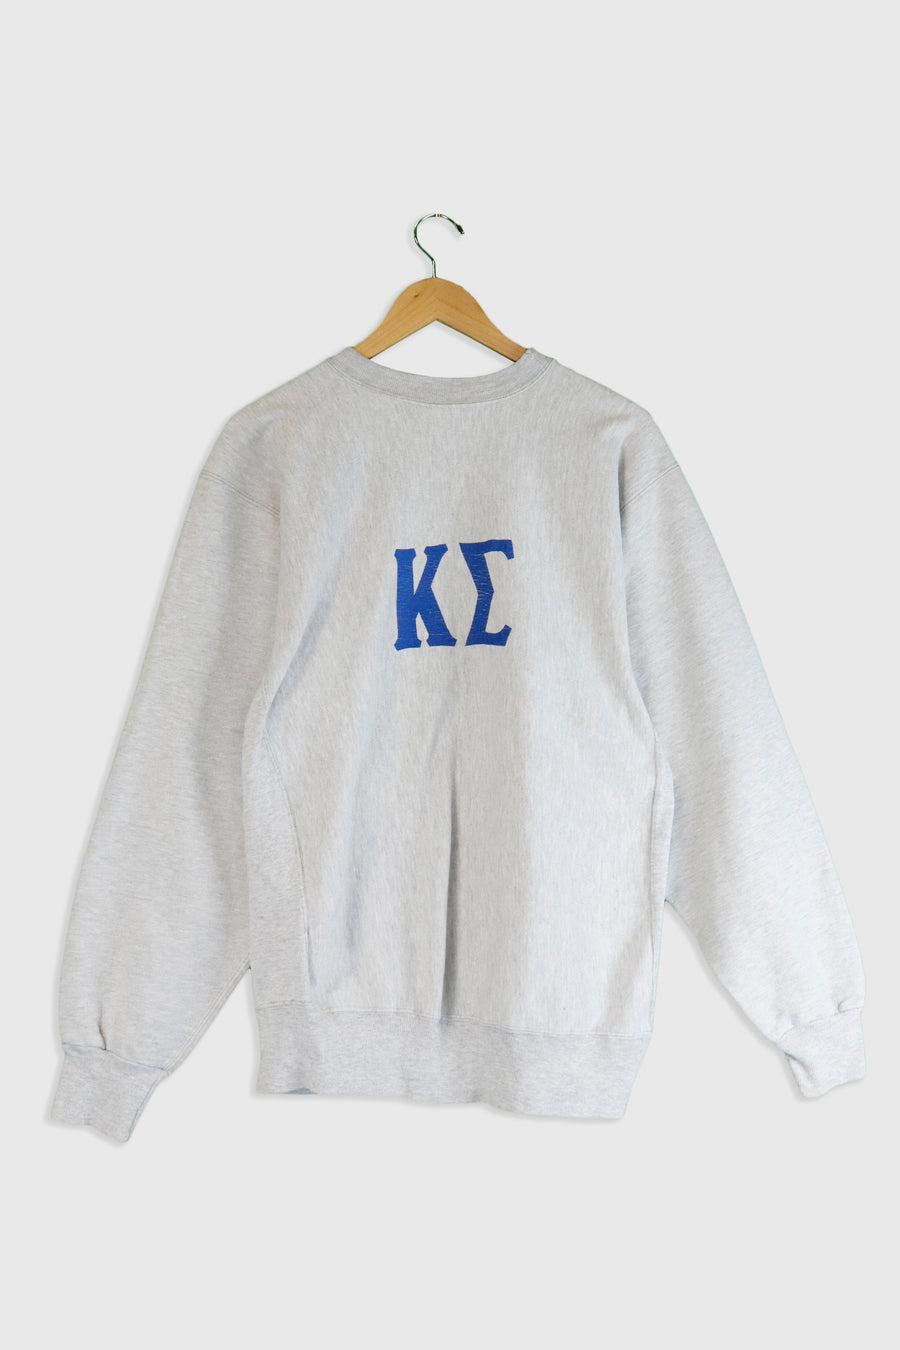 Vintage 1988 MSU Greek Week Sweatshirt Sz XL